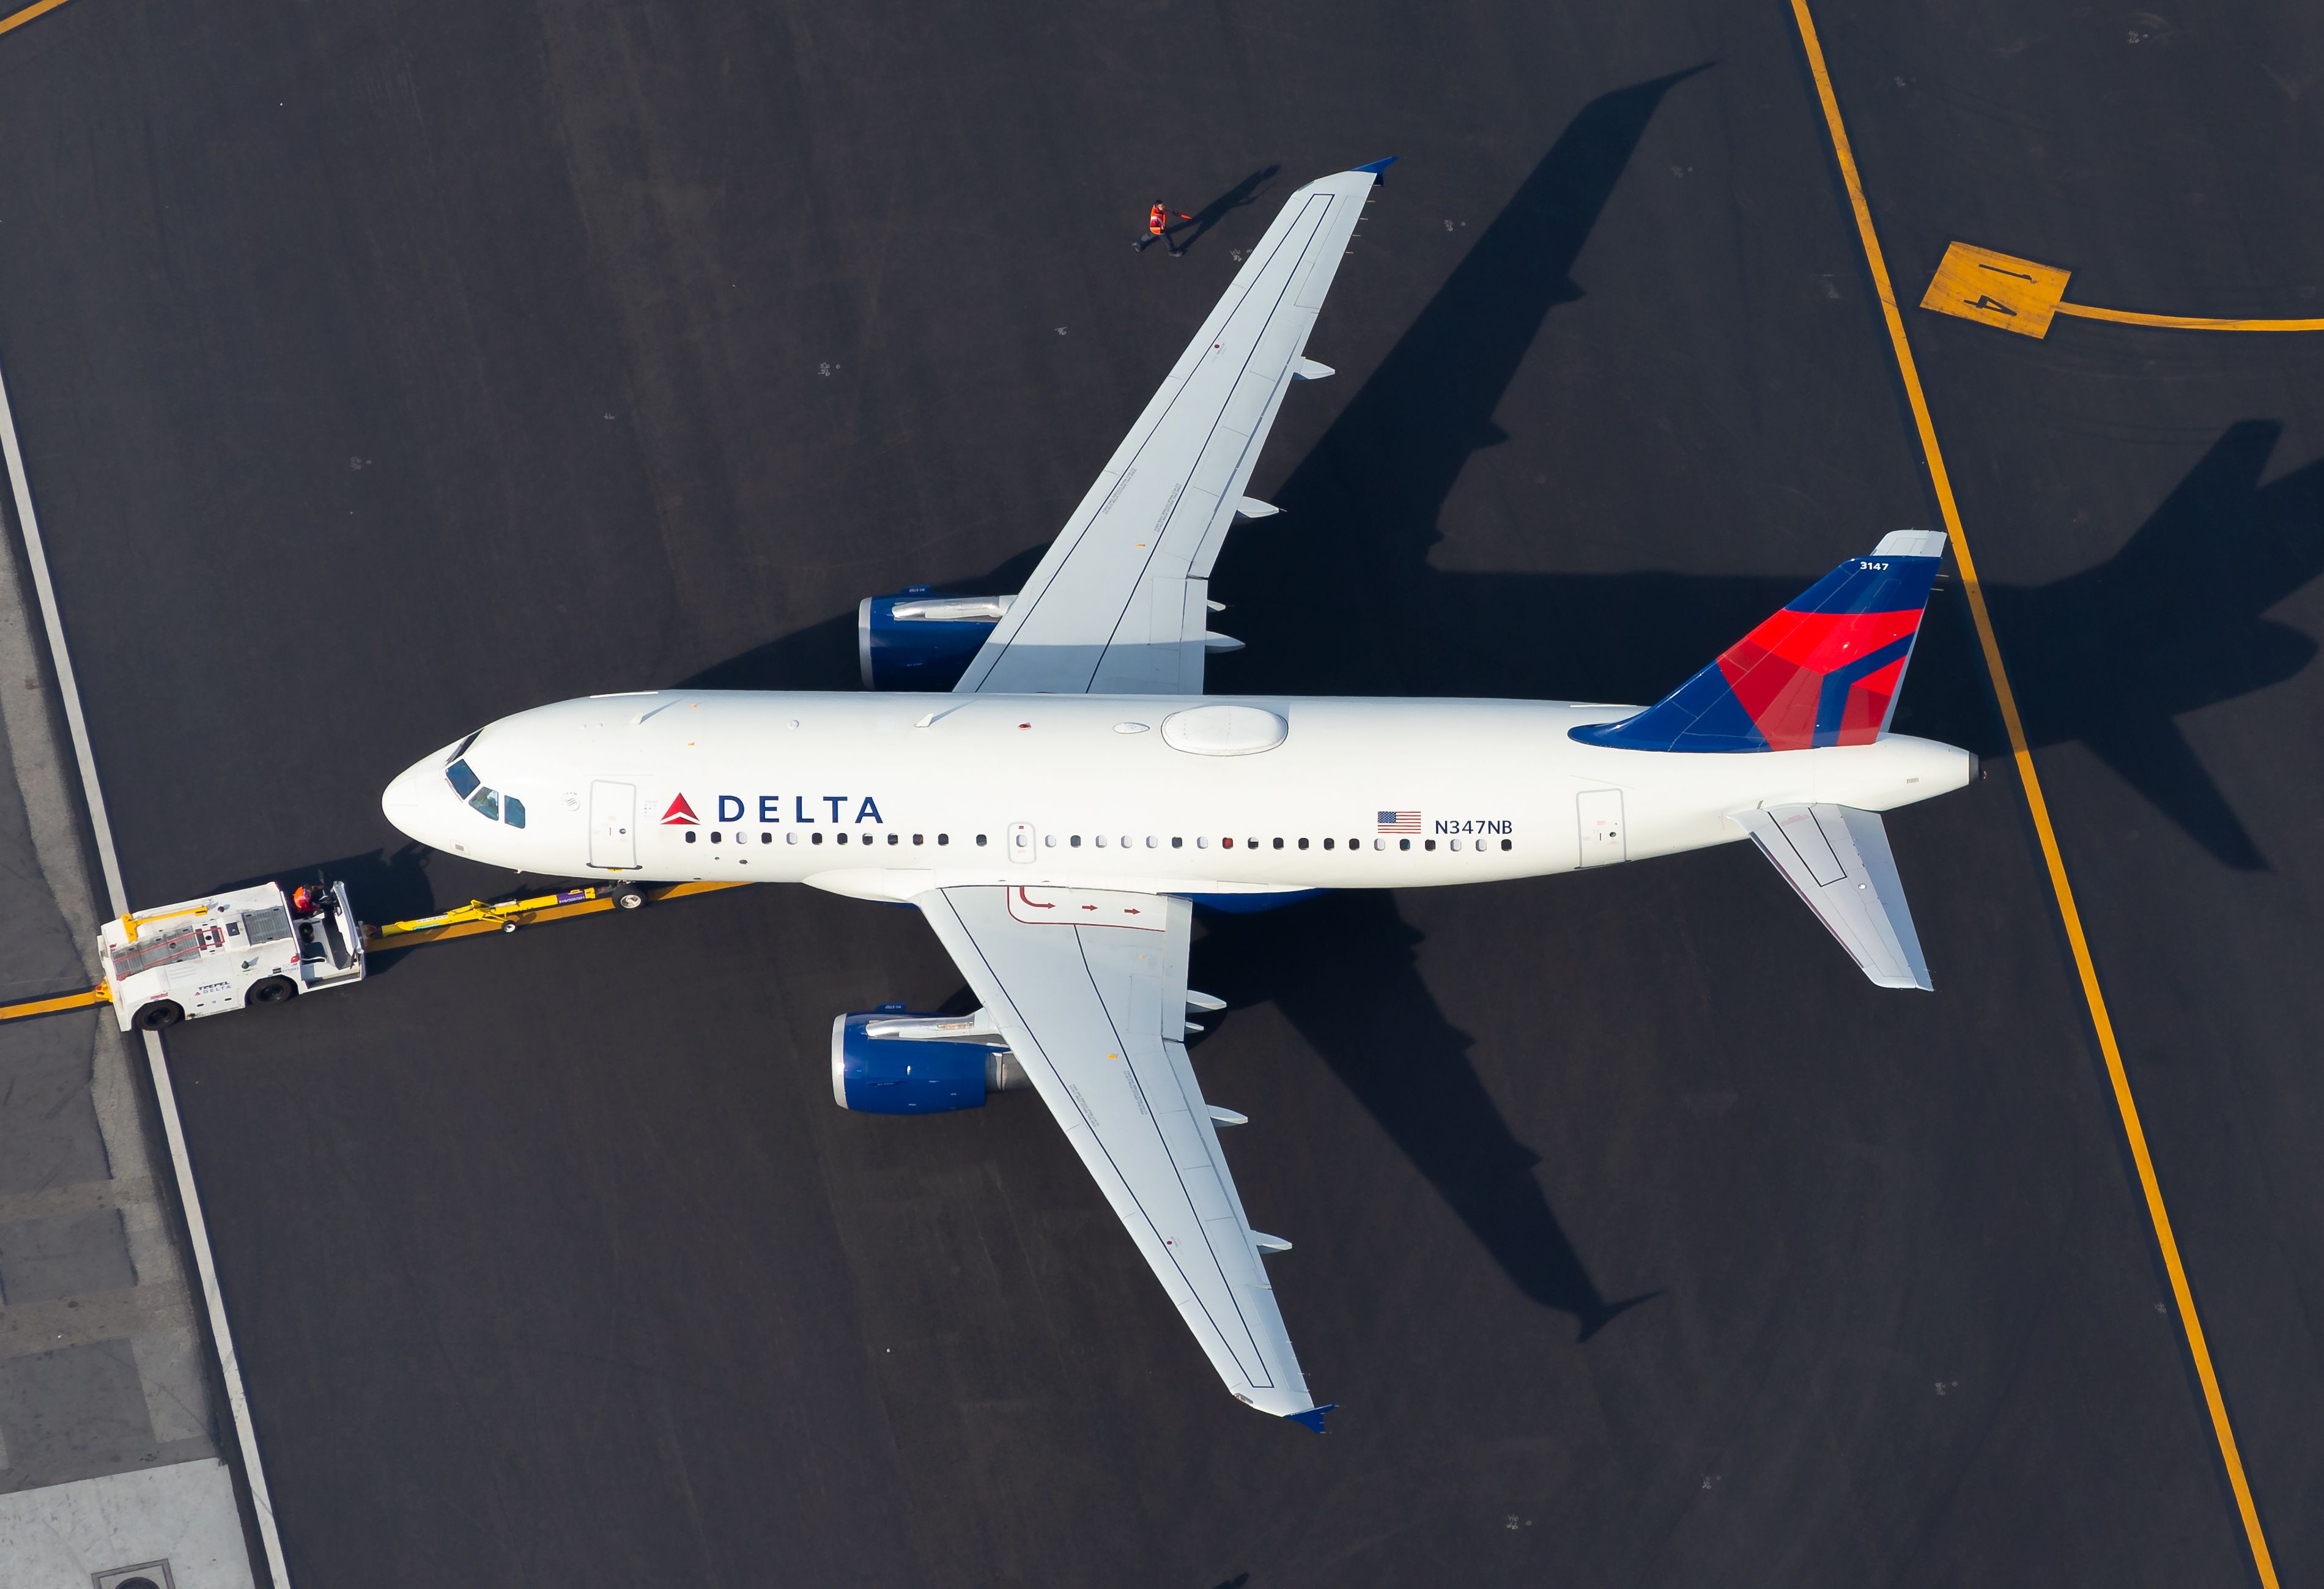 Delta Air Lines Airbus A319 pushing back at Los Angeles International Airport.